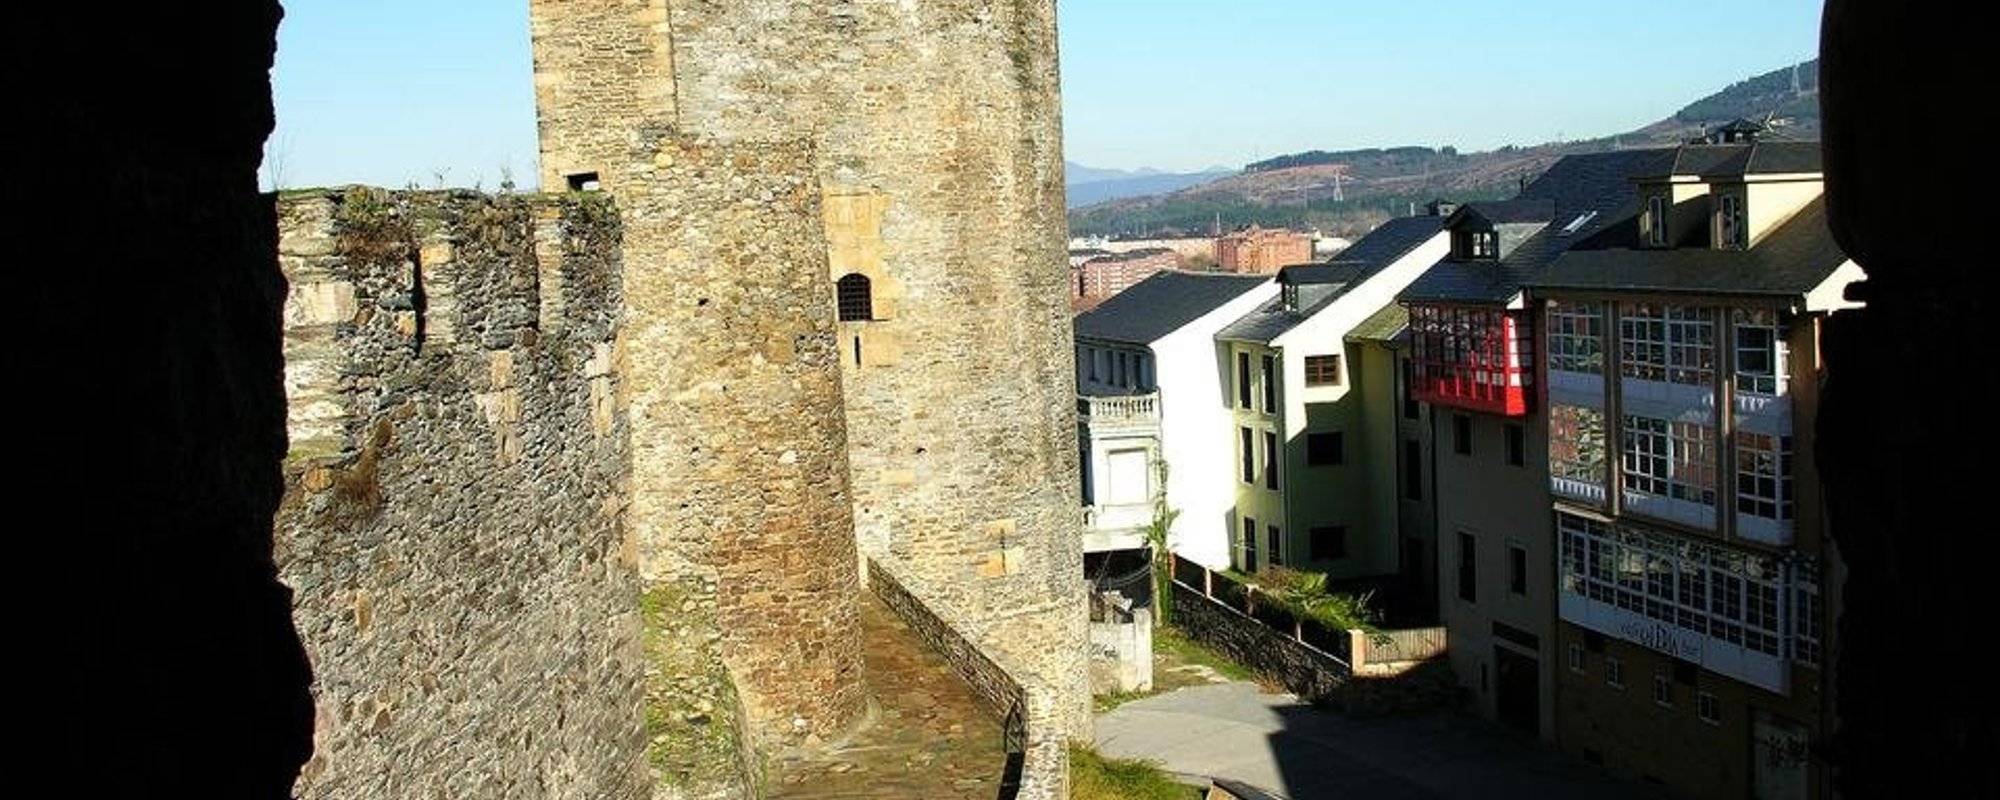 Ponferrada view from its Templar castle